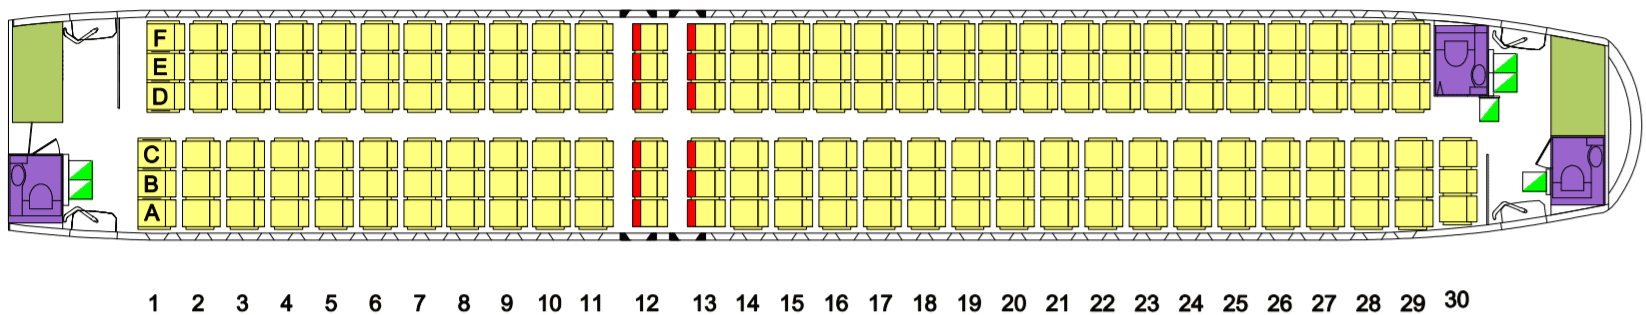 QantasLink A320 Seat Map